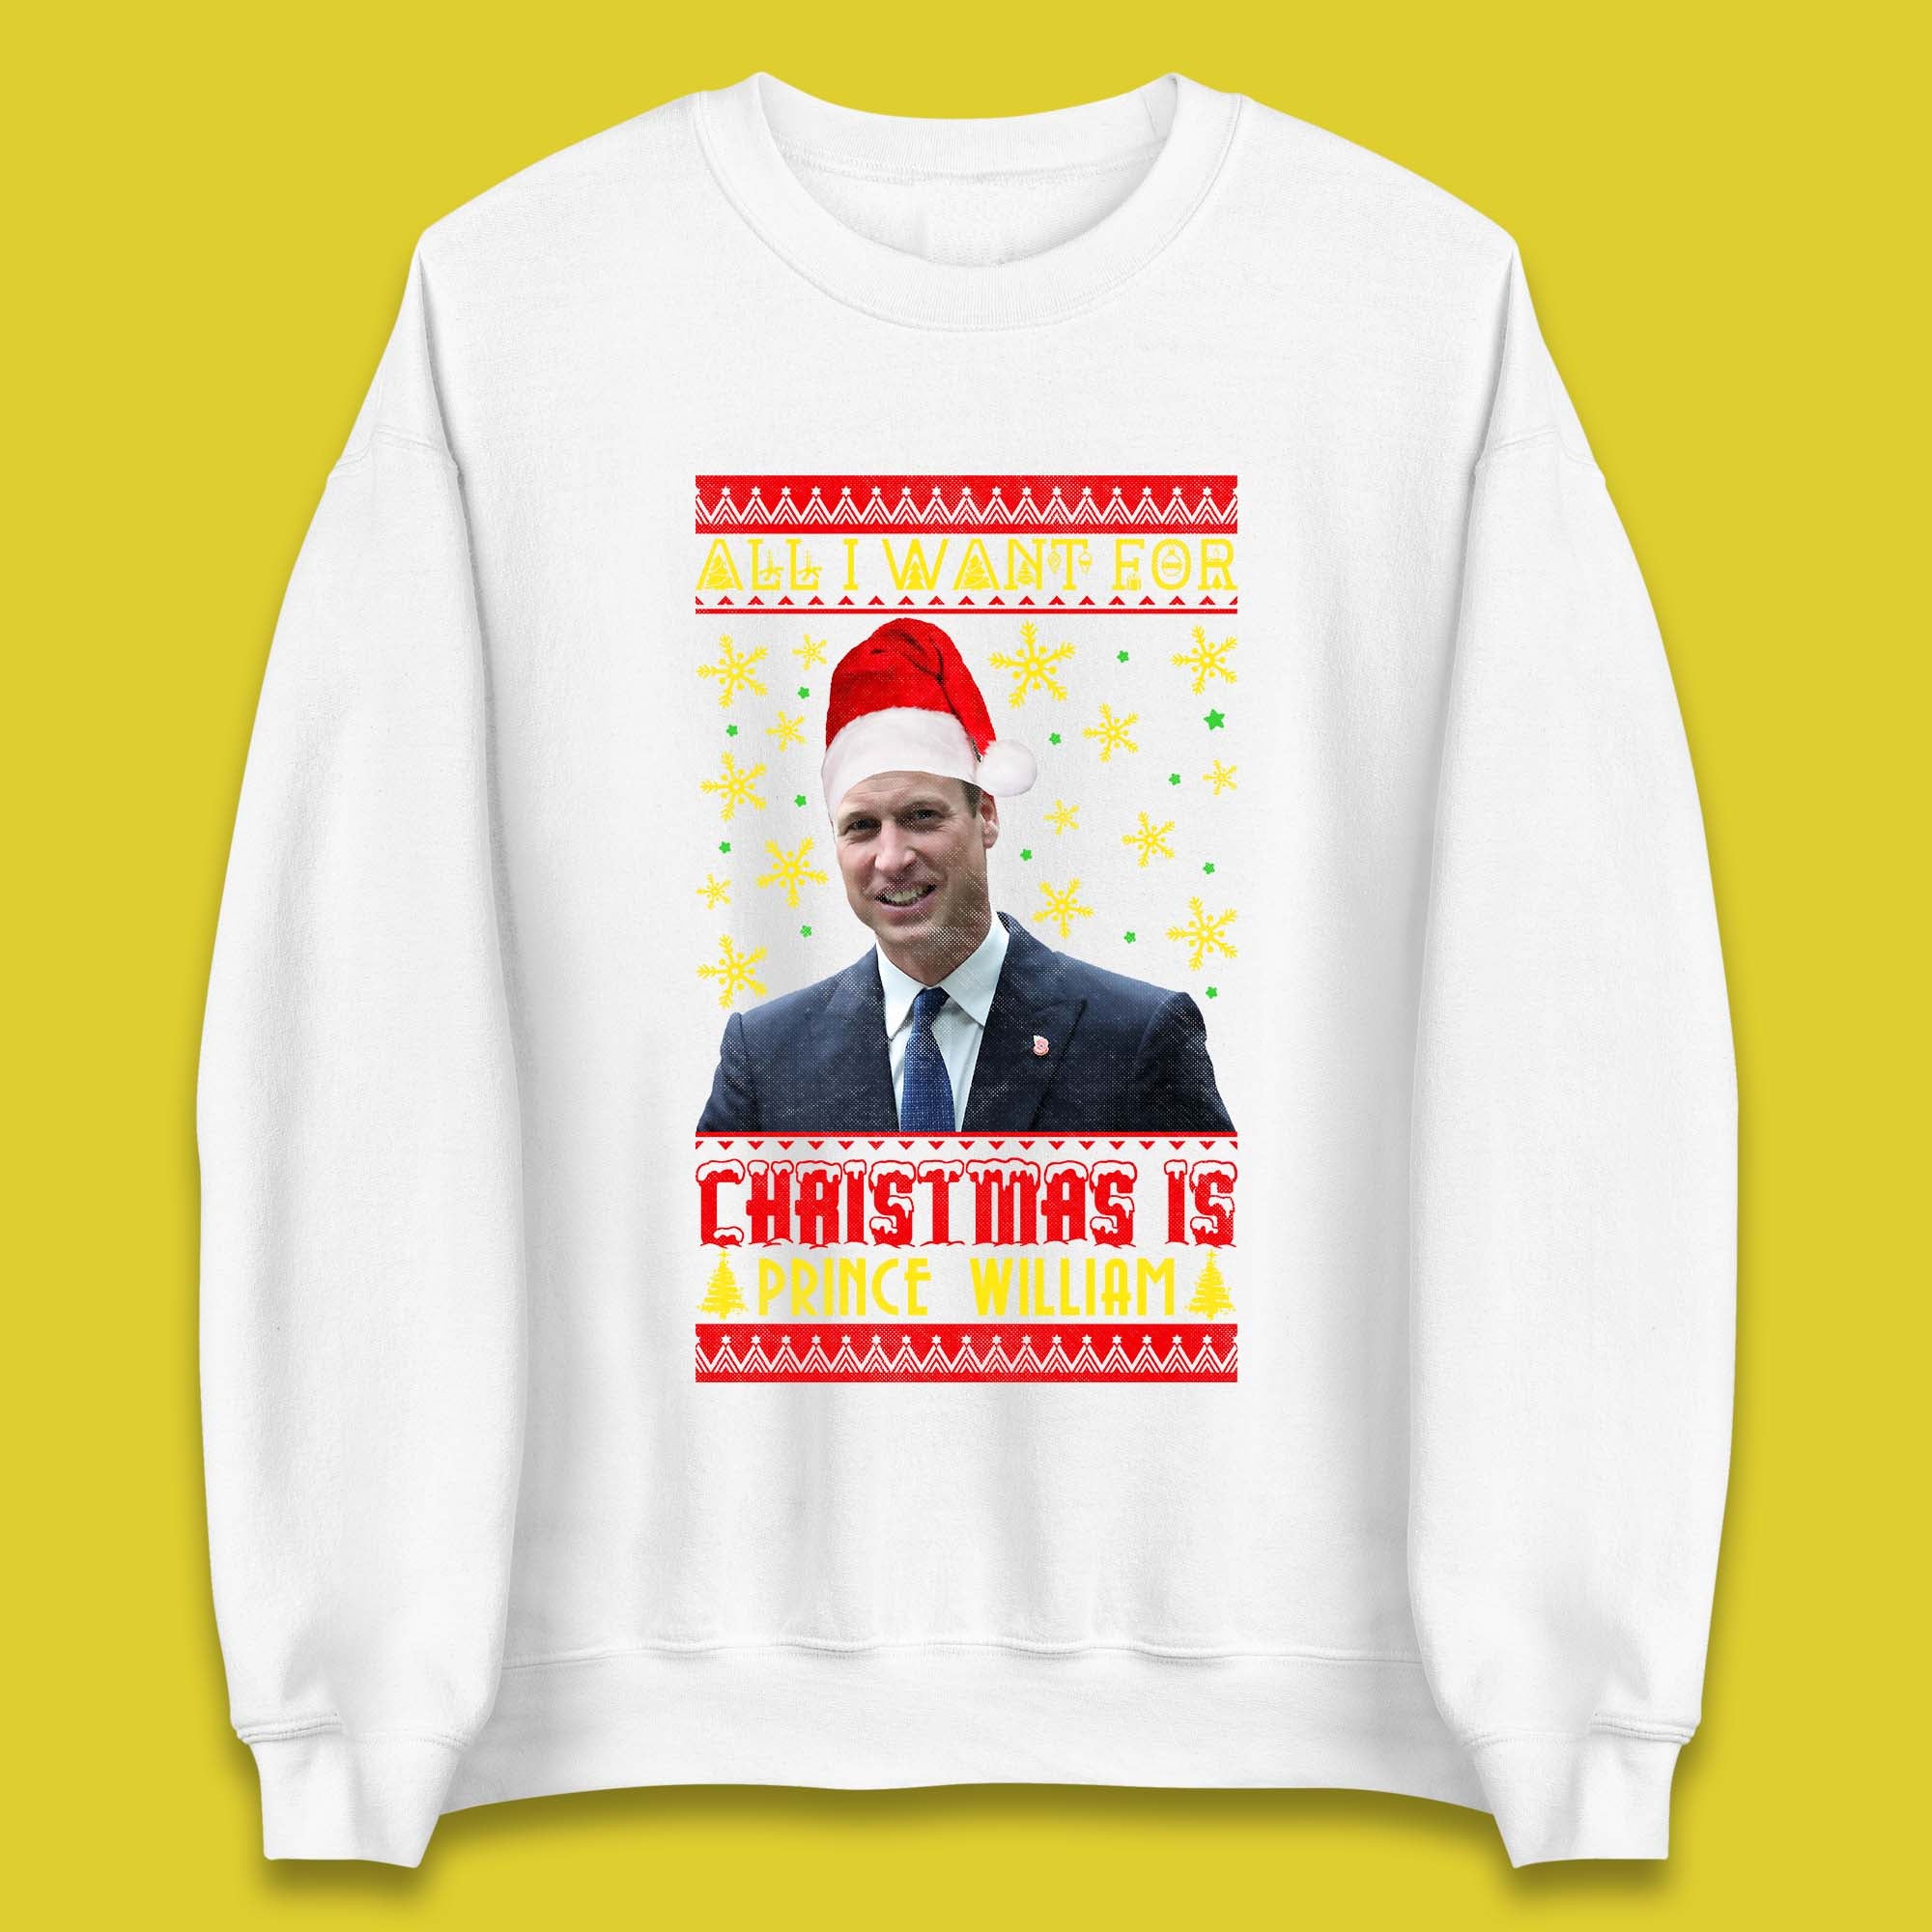 Want Prince William For Christmas Unisex Sweatshirt